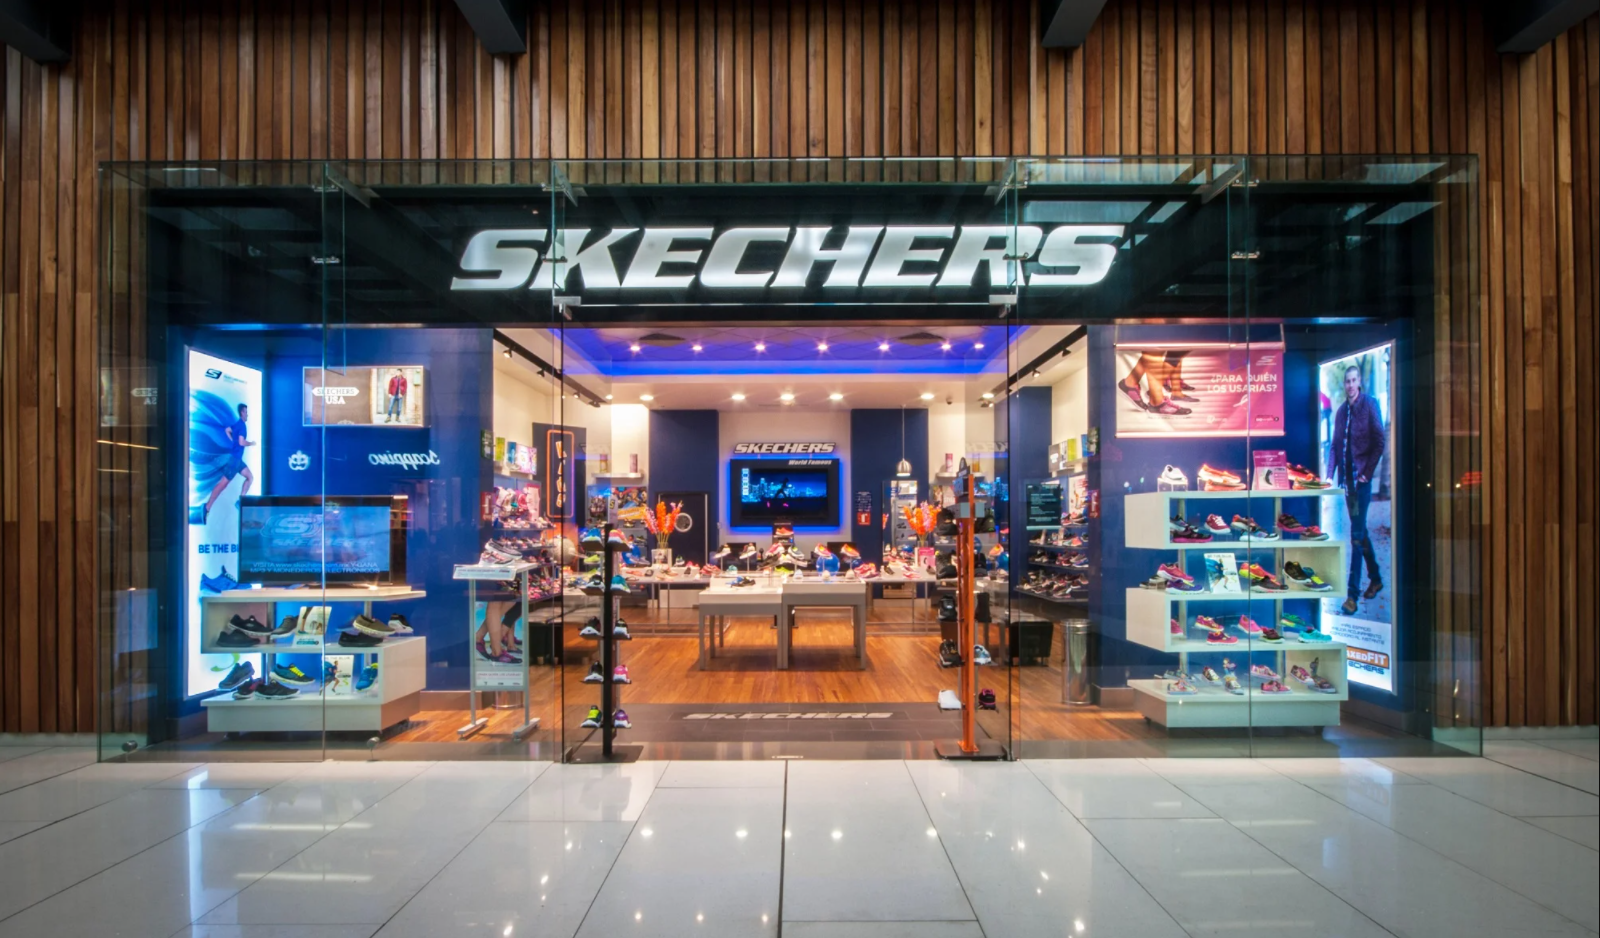 Skechers Global Footwear Company Opens Store In Metaverse